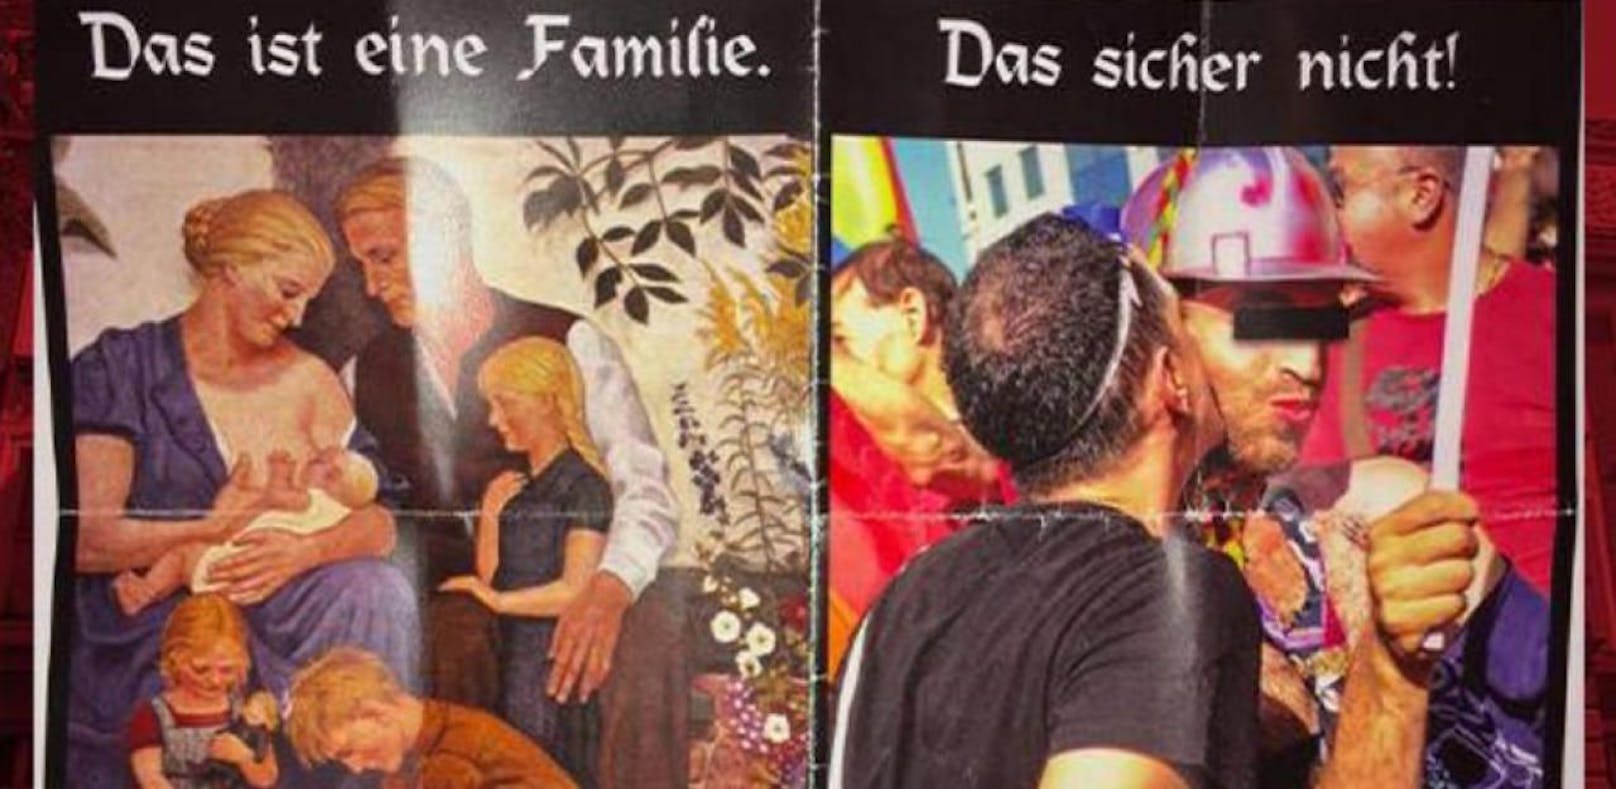 "Burschenschaft hetzt mit Nazi-Bild gegen Schwule"